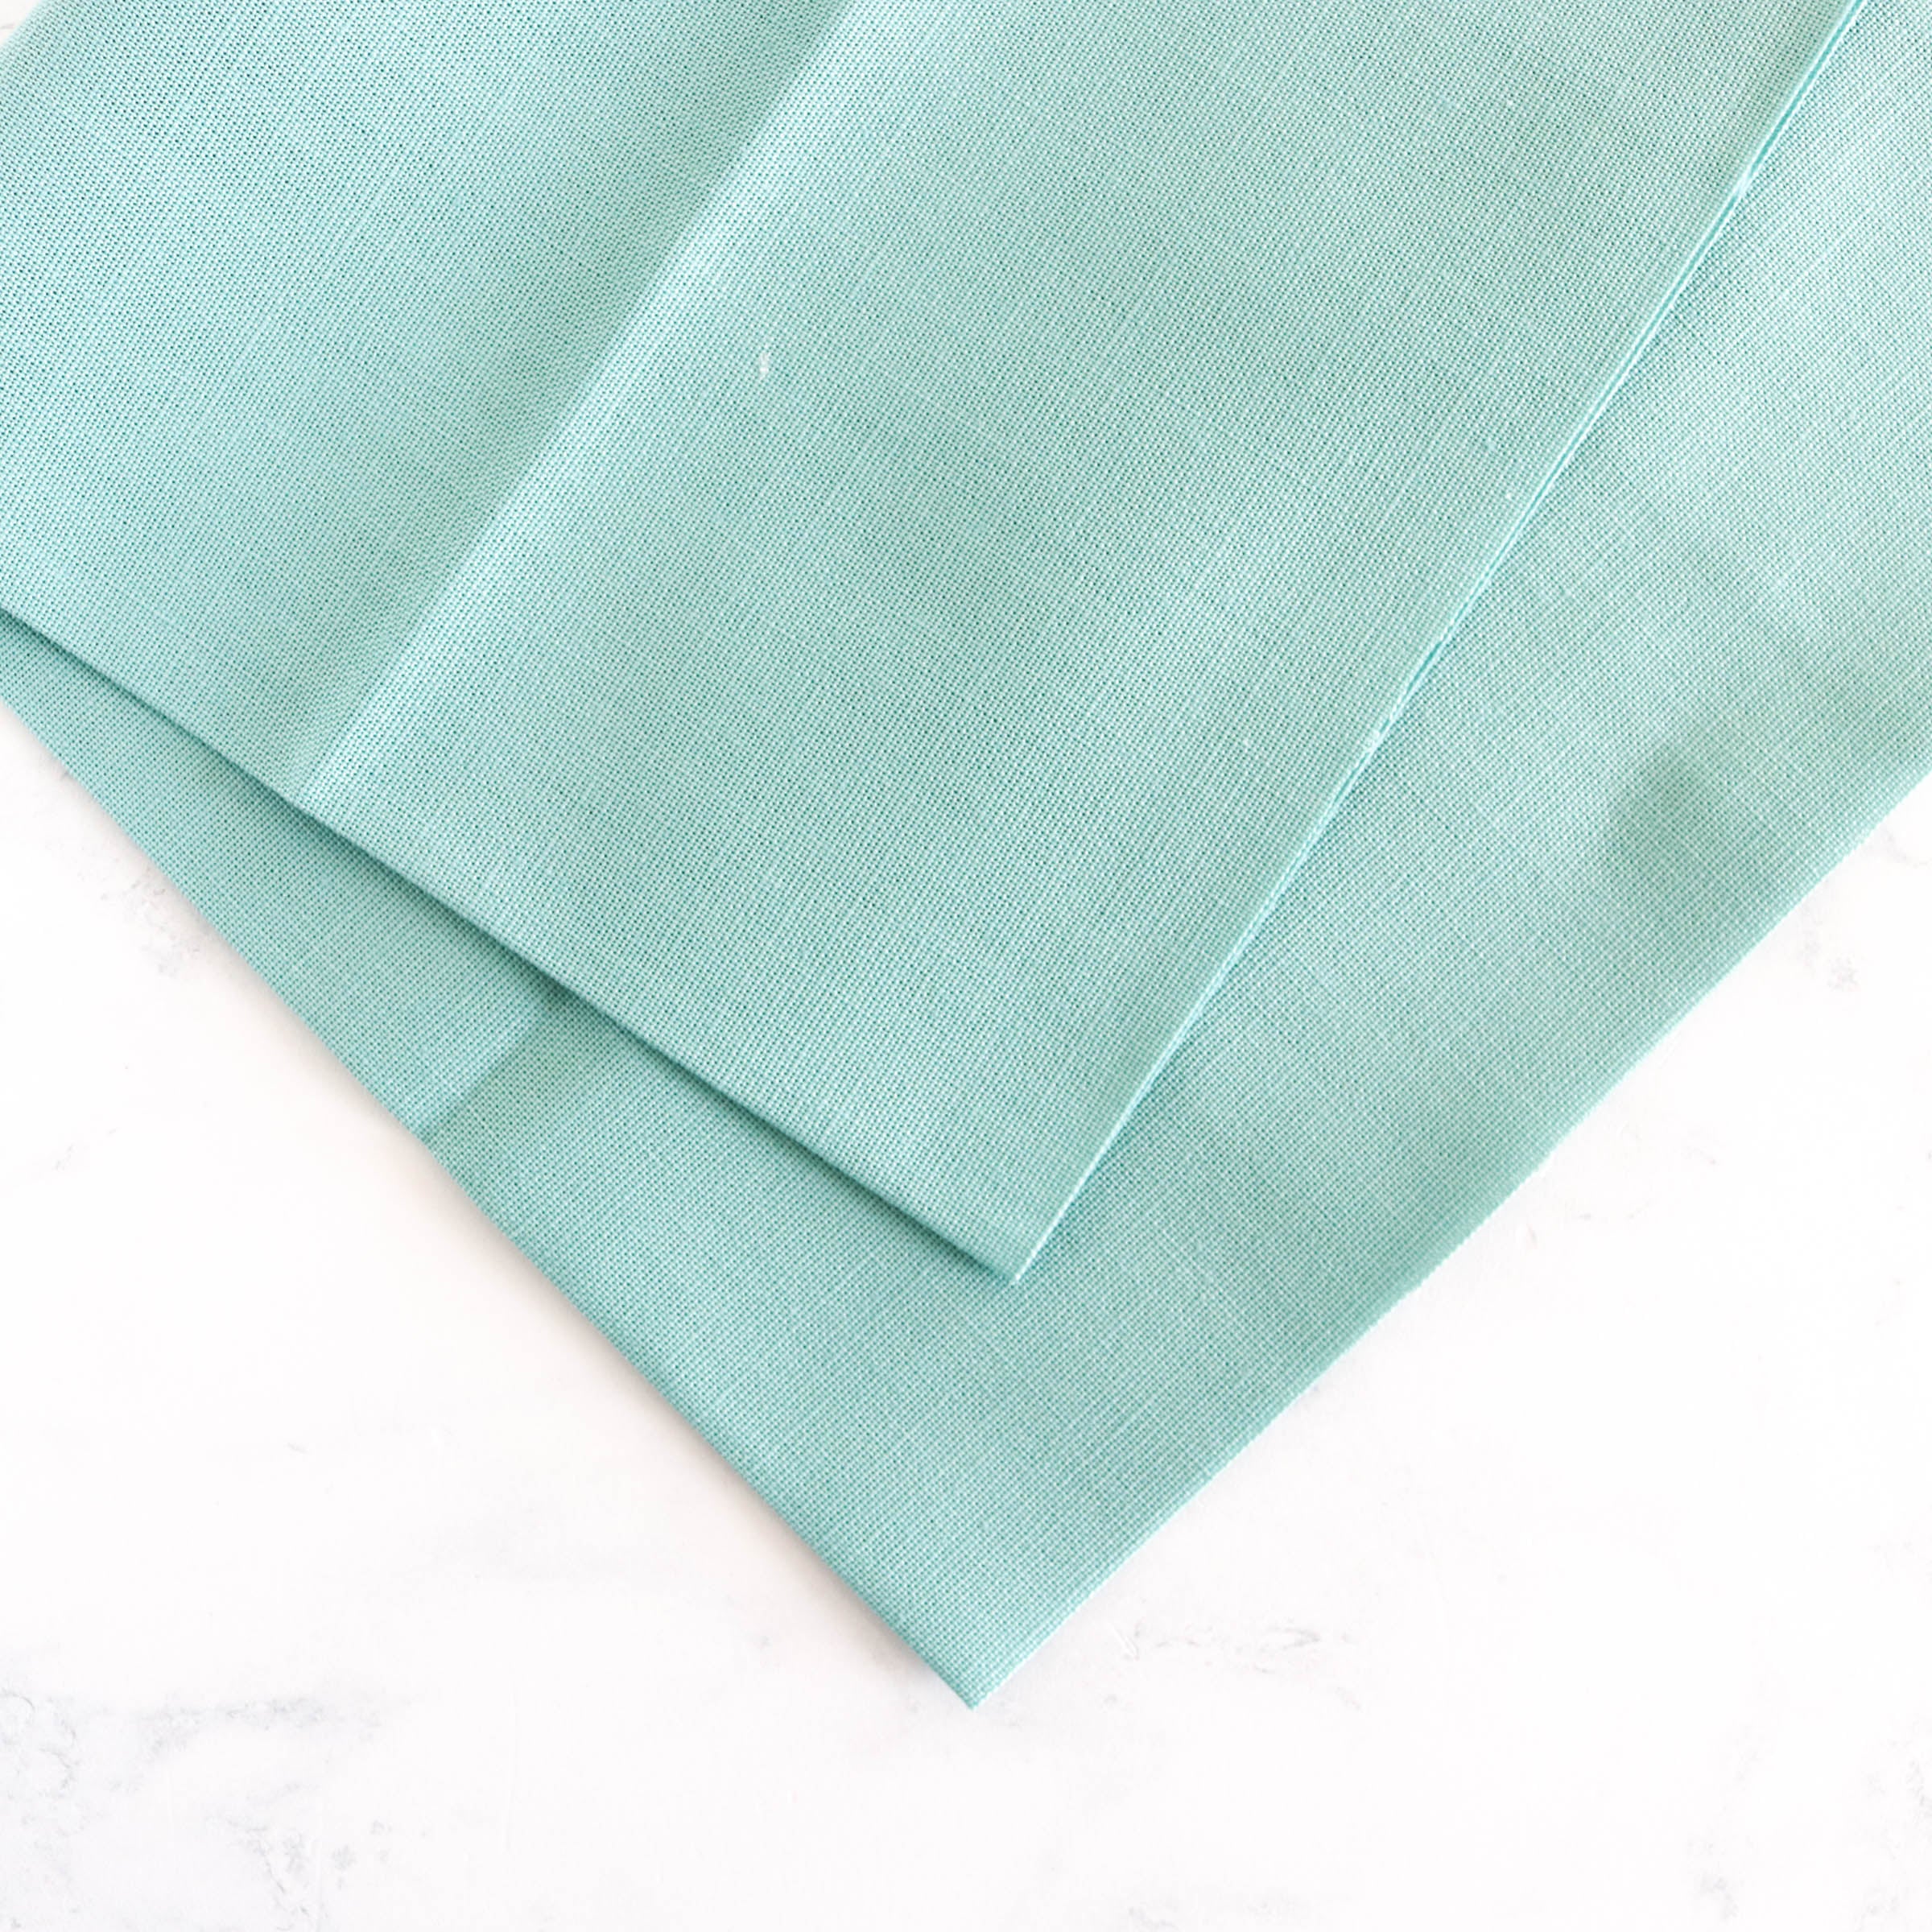 Embroidery Fabric 6 Sample Pack, Blue Green Linen Fabric for Hand Embroidery,  Cotton Linen Blend Fabric Bundle, DIY Needlework Crafts 